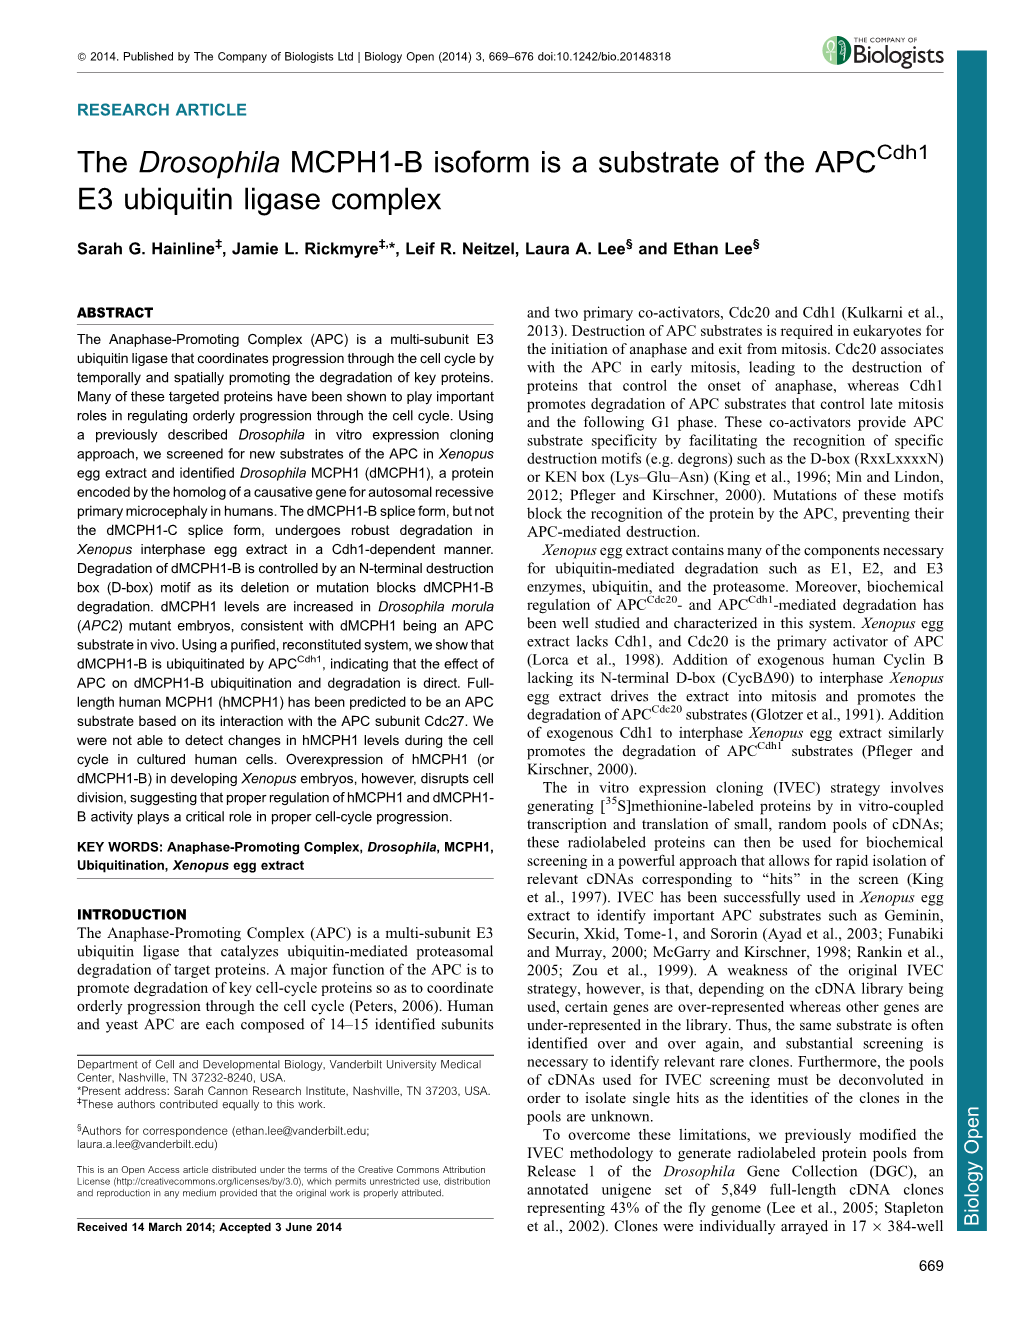 The Drosophila MCPH1-B Isoform Is a Substrate of the APC E3 Ubiquitin Ligase Complex